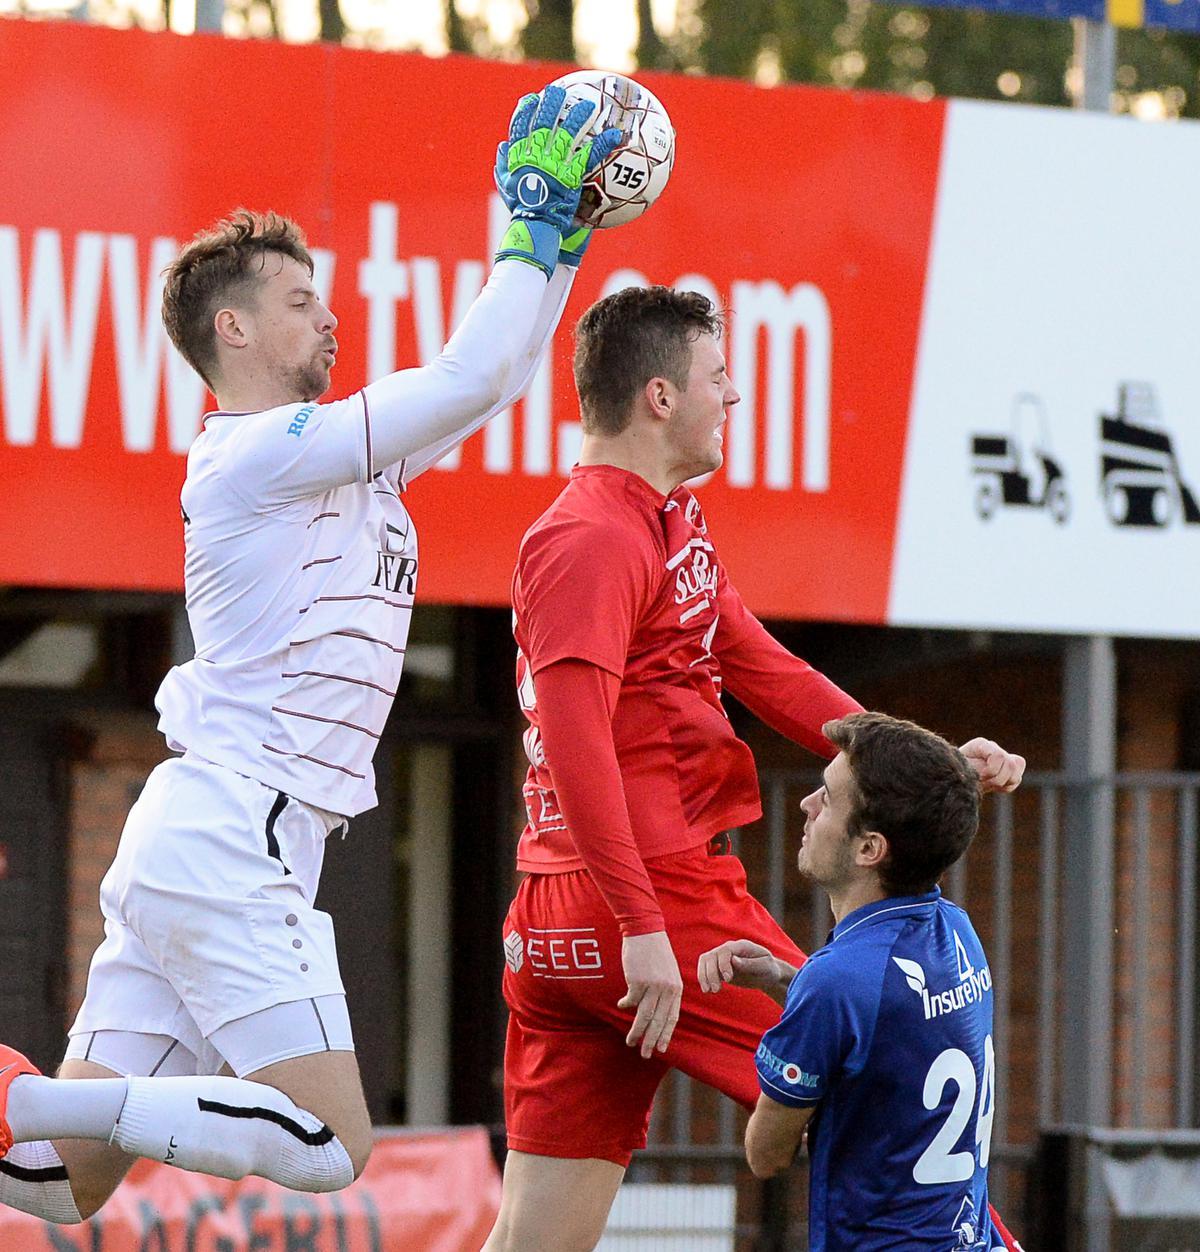 Lars Knipping plukt hier namens SK Ronse de bal boven de hoofden van Lennart Sampers van FC Gullegem.©Dirk Vuylsteke / VDB VDB